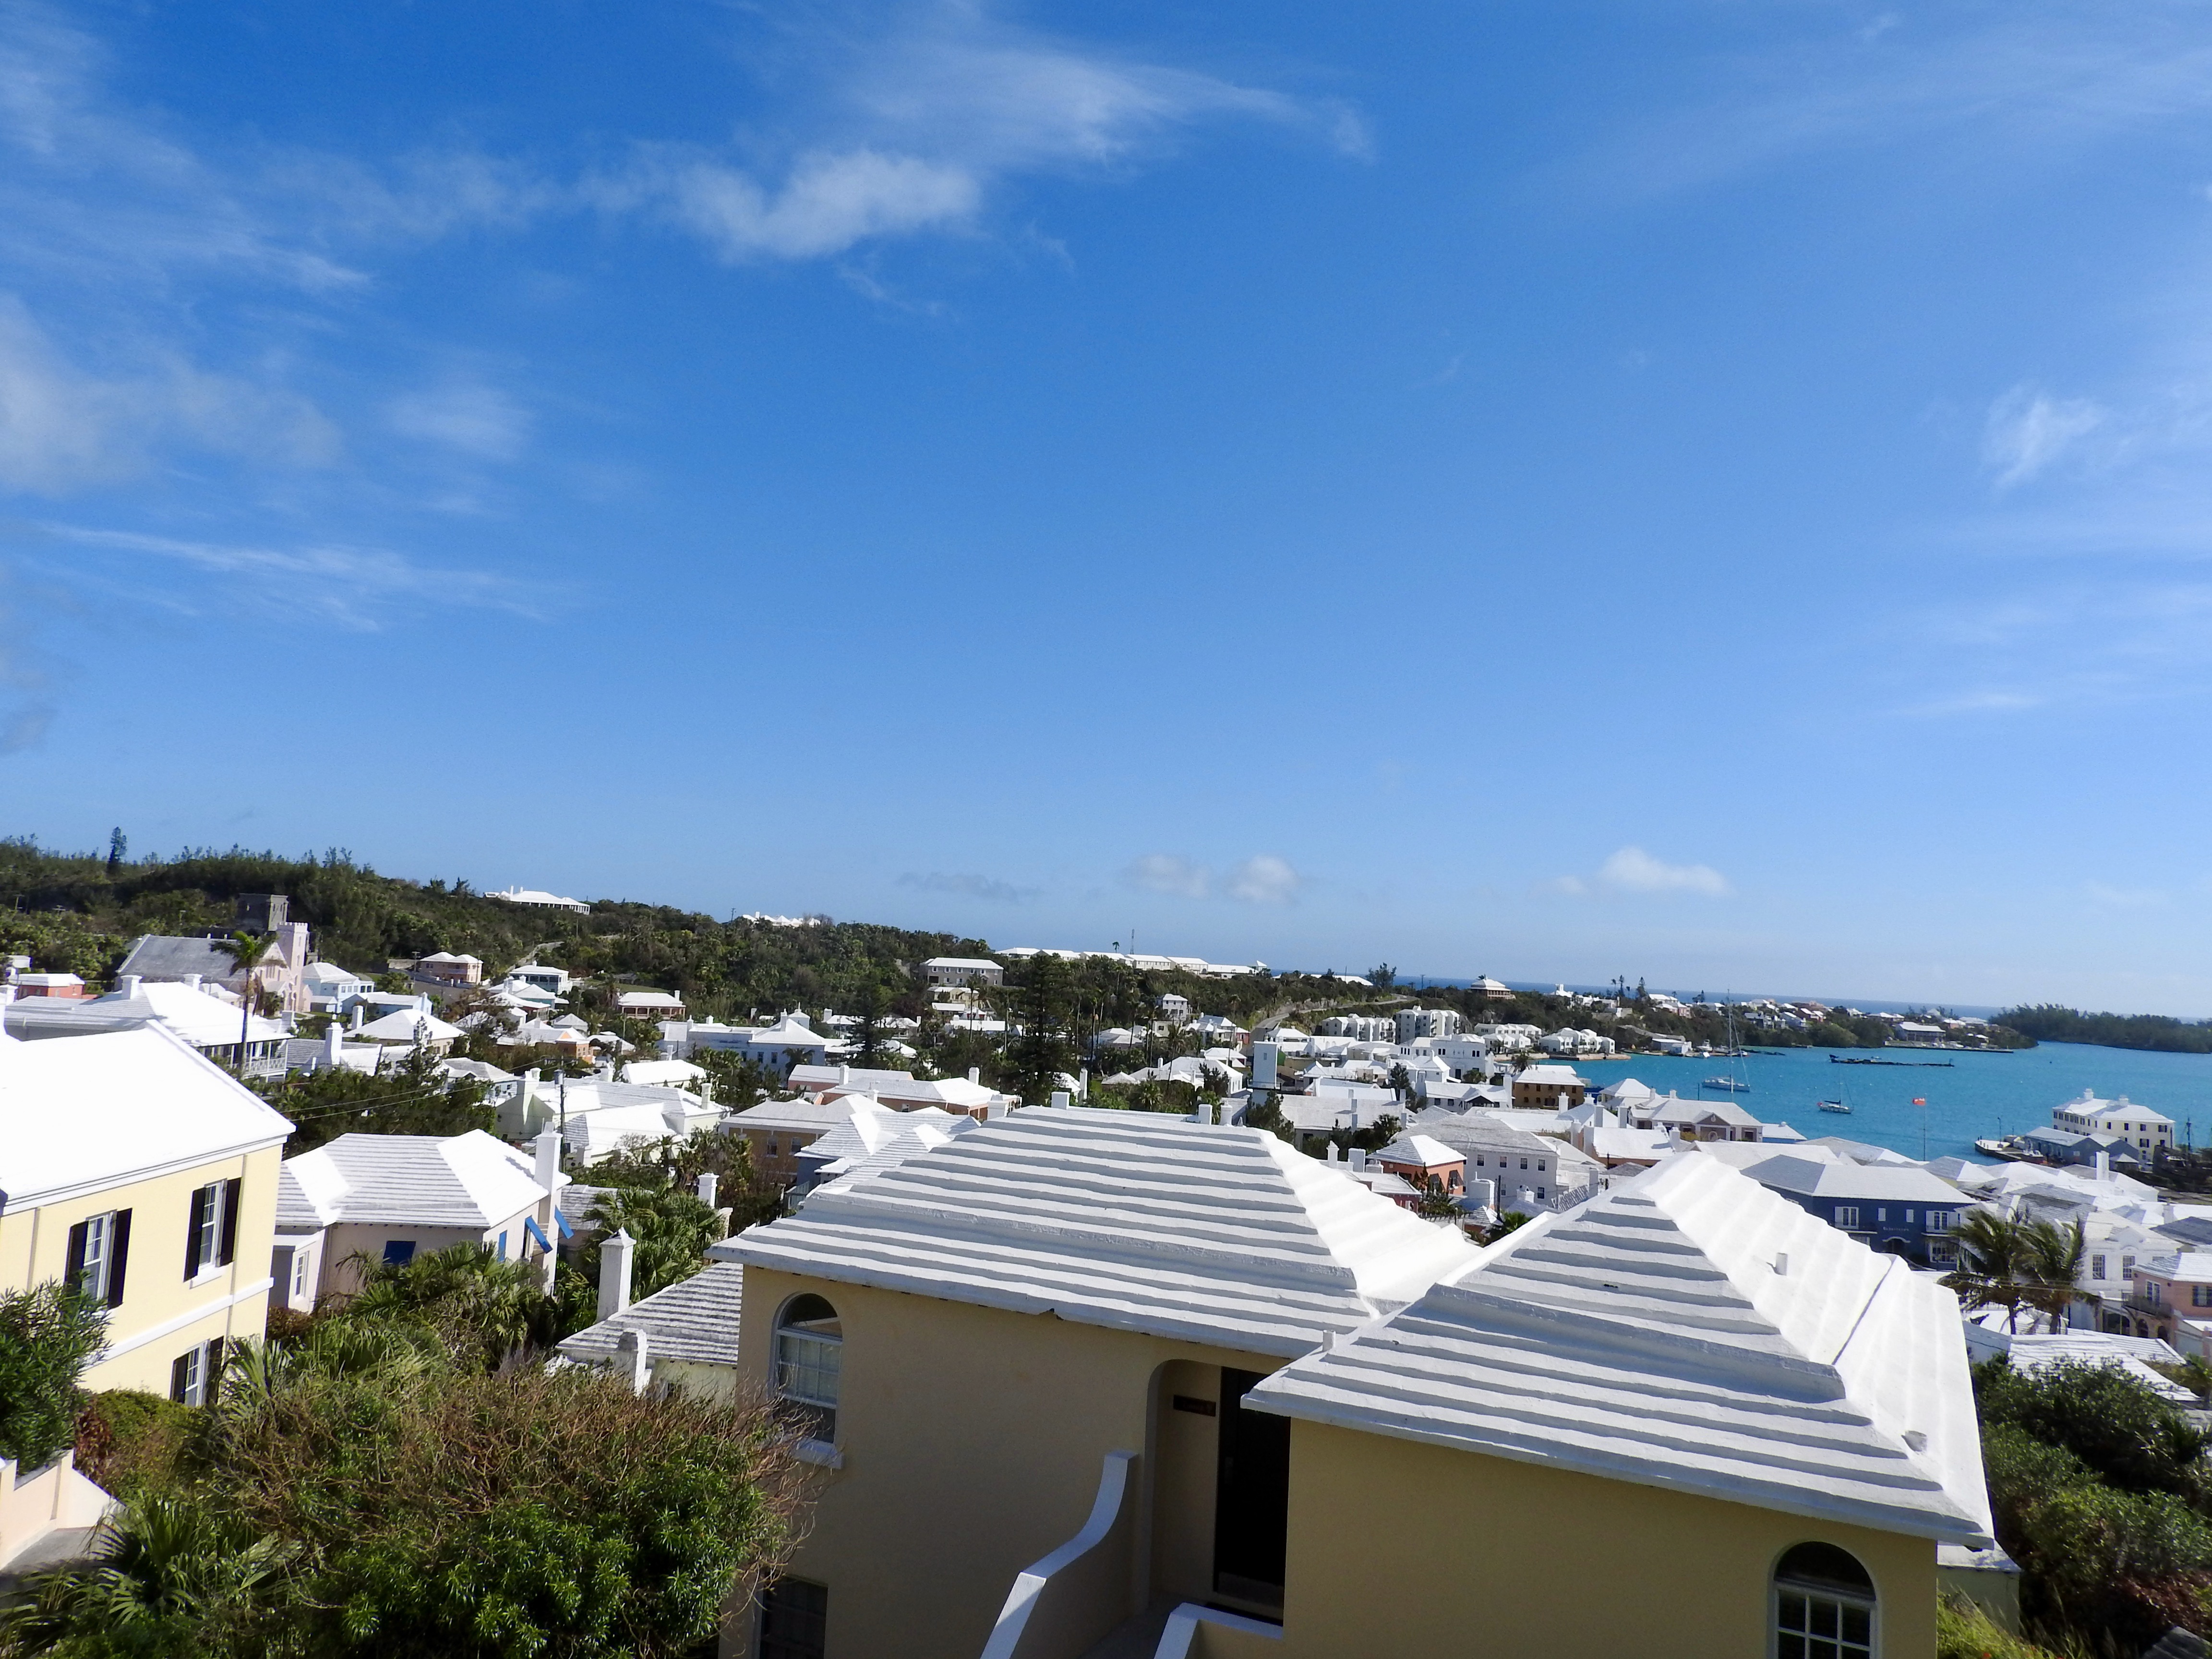 Walking through St. George's, Bermuda